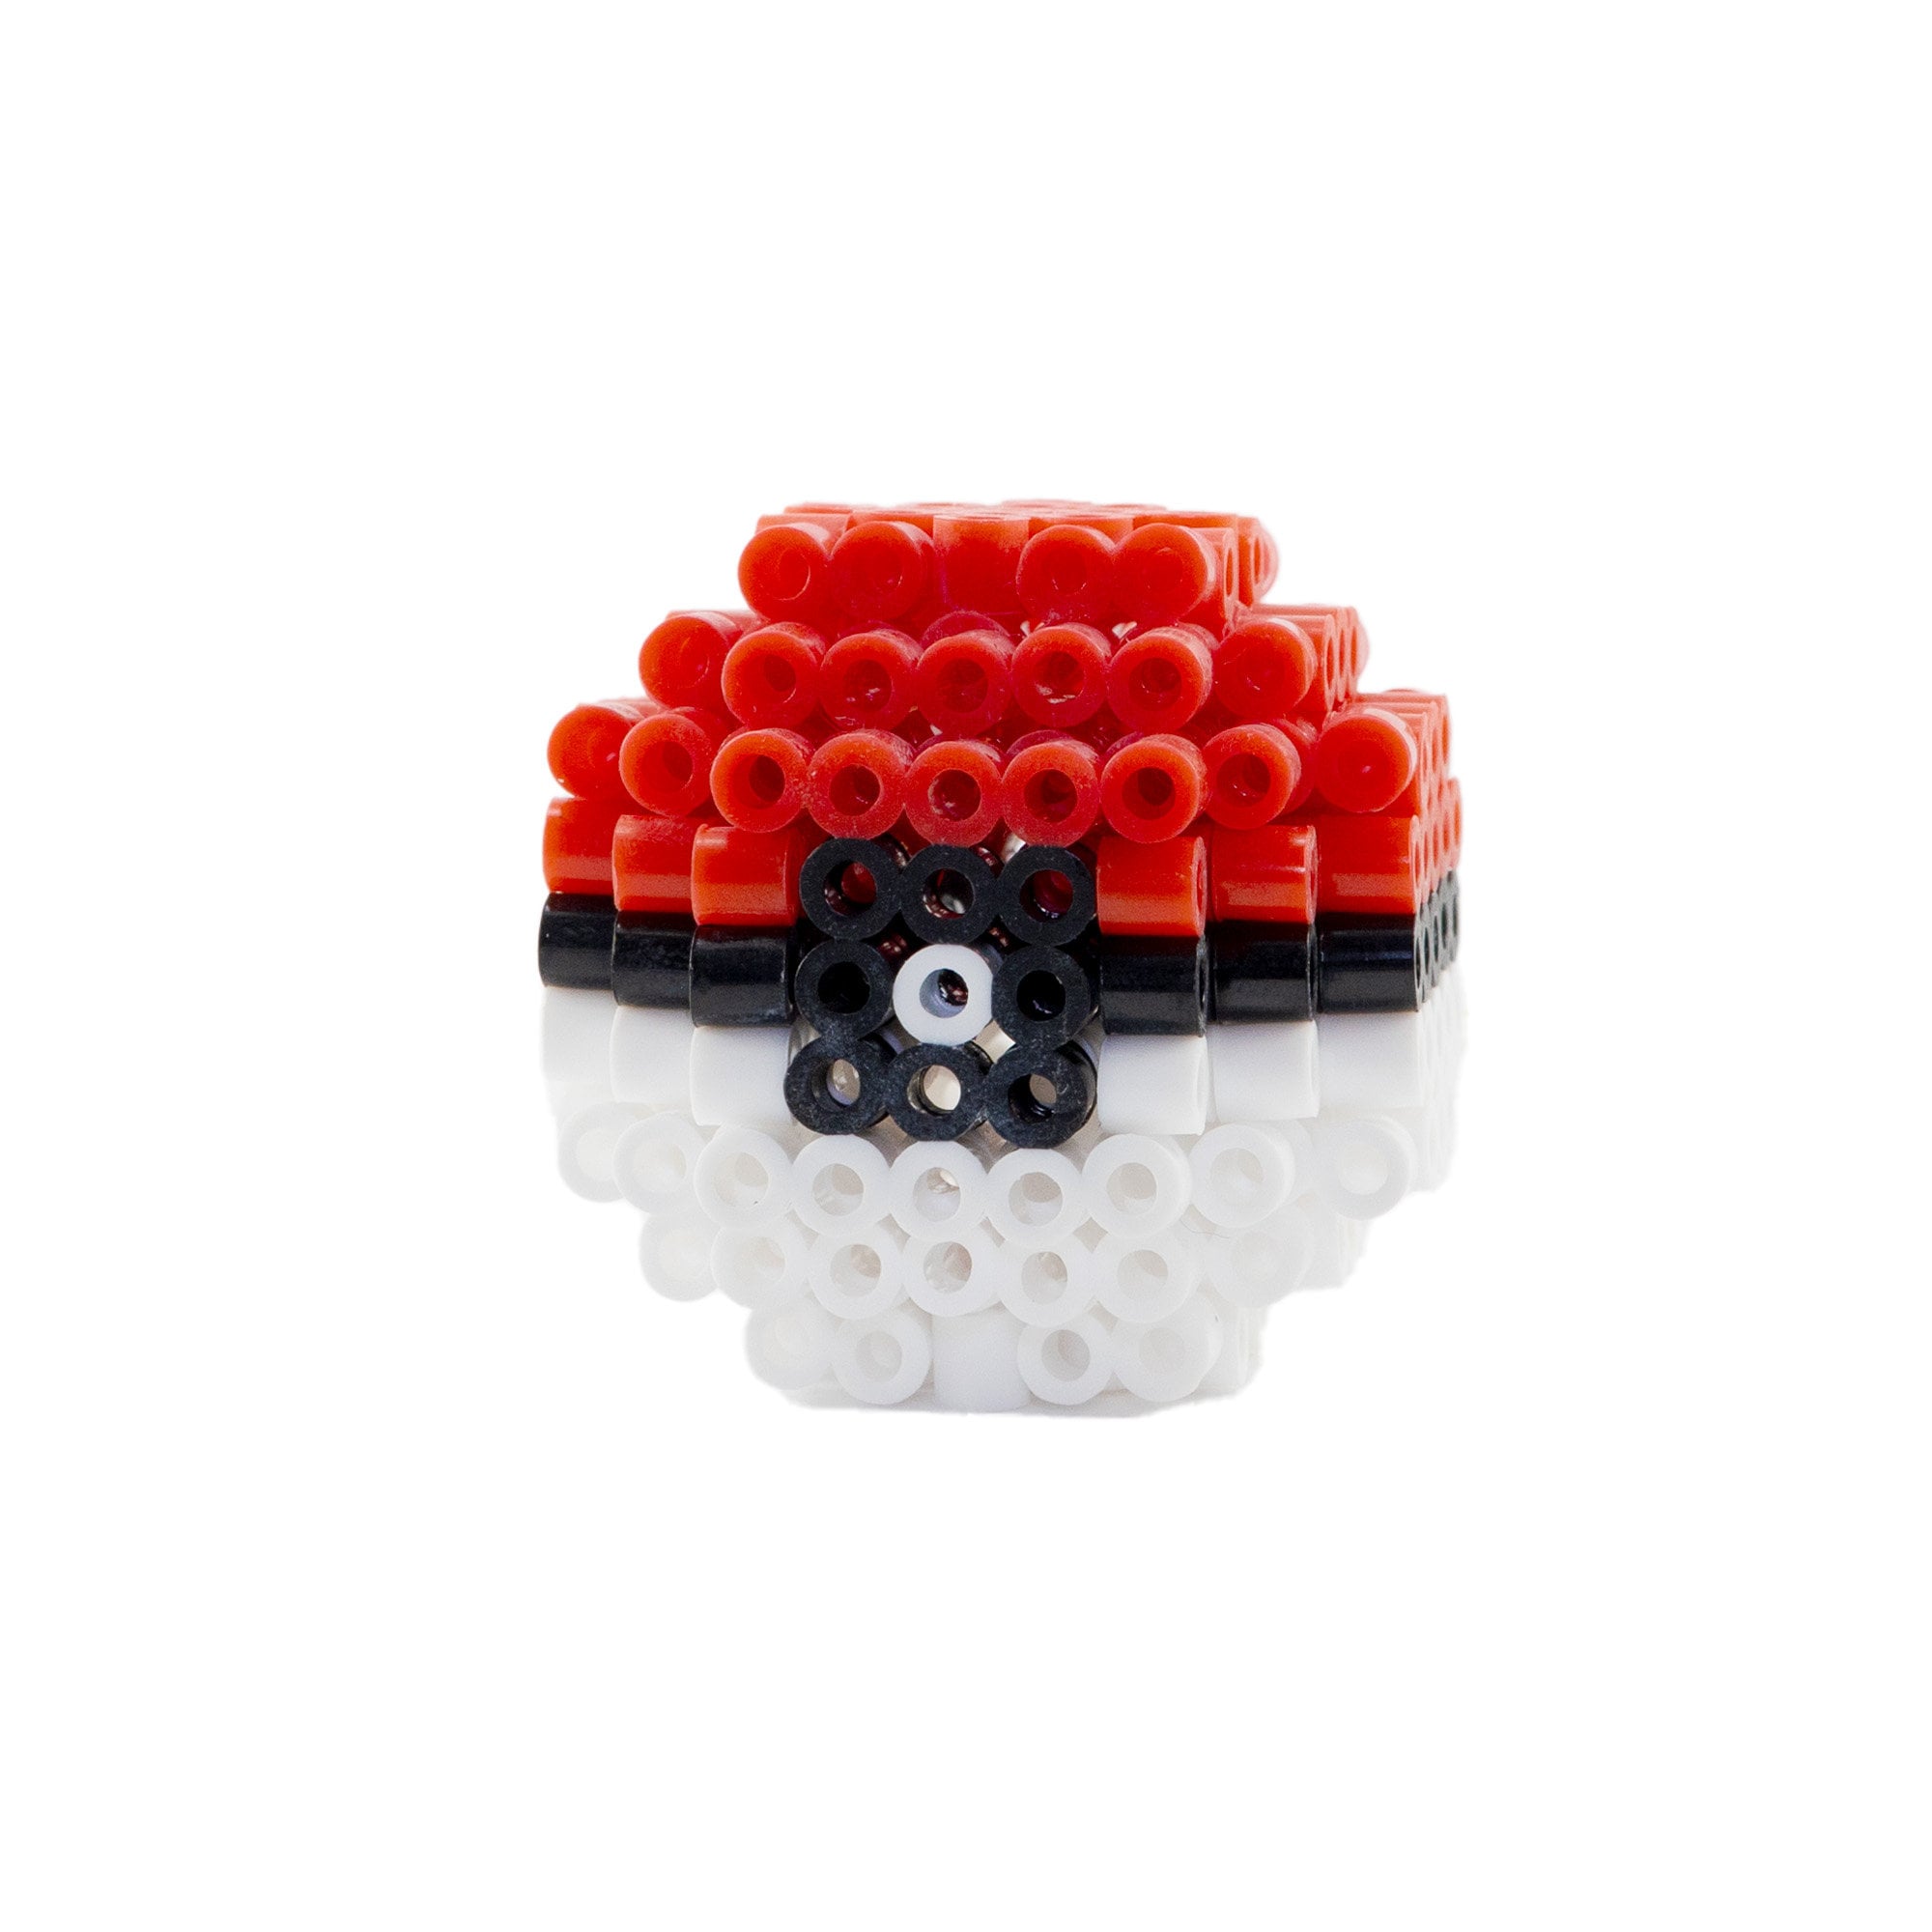 Pokemon Perler Beads Set